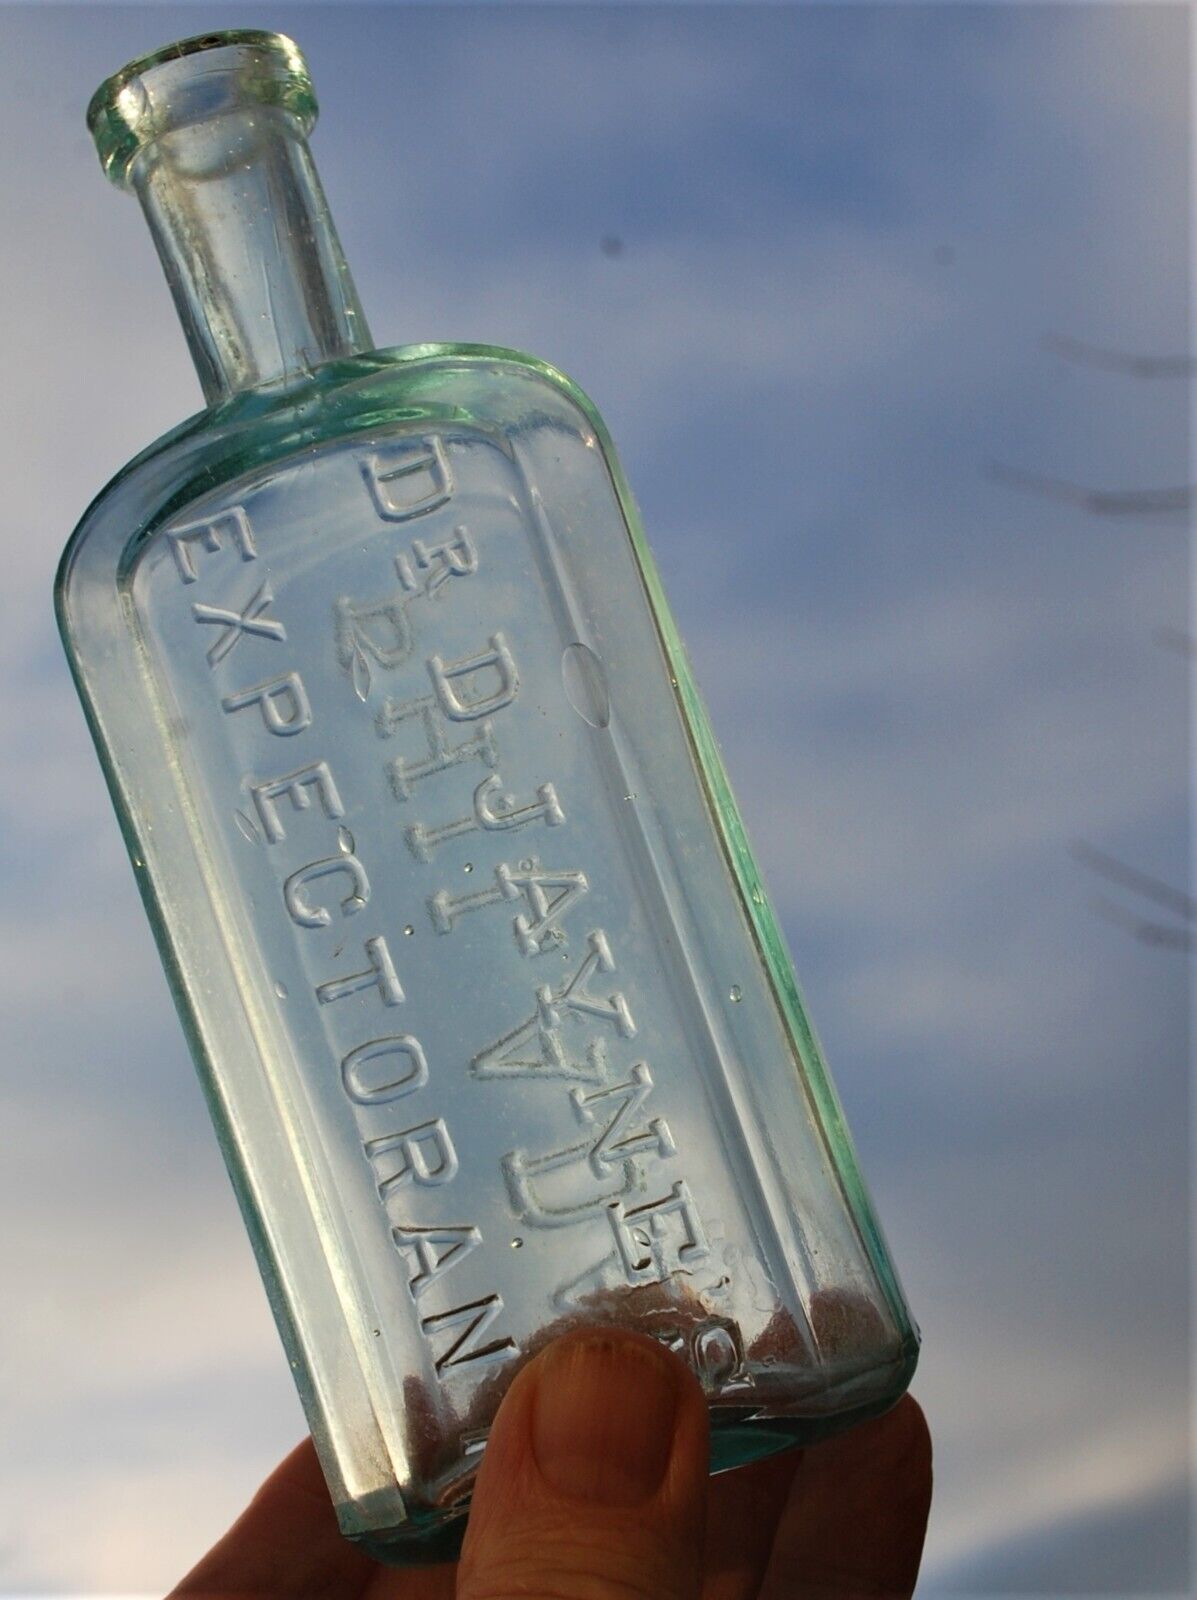 DR. D. JAYNE’S EXPECTORANT, an 1880s medicine bottle, from Philadelphia PA.